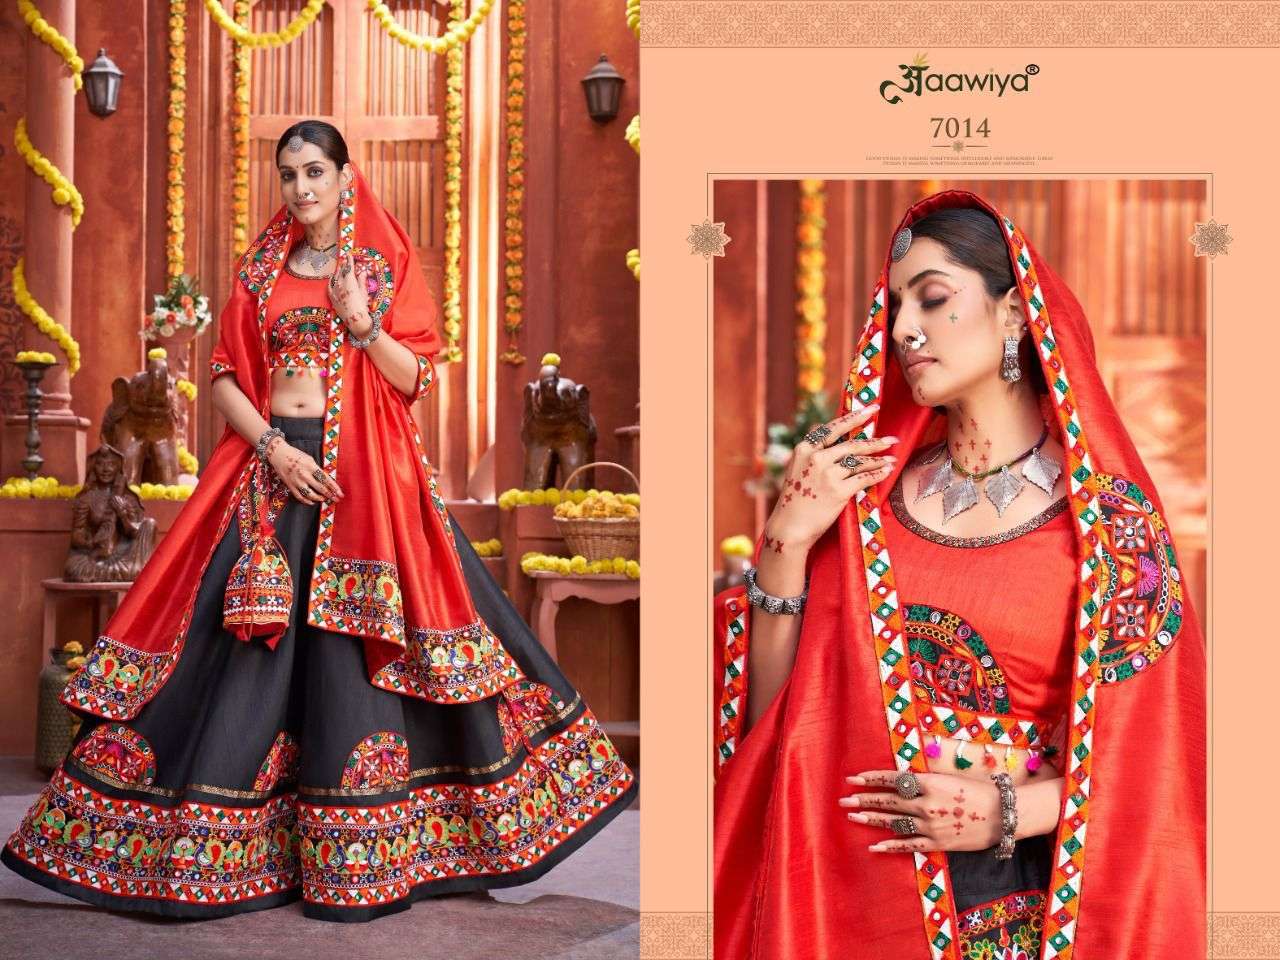 Rajwadi Vol-3 By Aawiya 7011 To 7014 Series Designer Beautiful Navratri Collection Occasional Wear & Party Wear Art Silk Lehengas At Wholesale Price